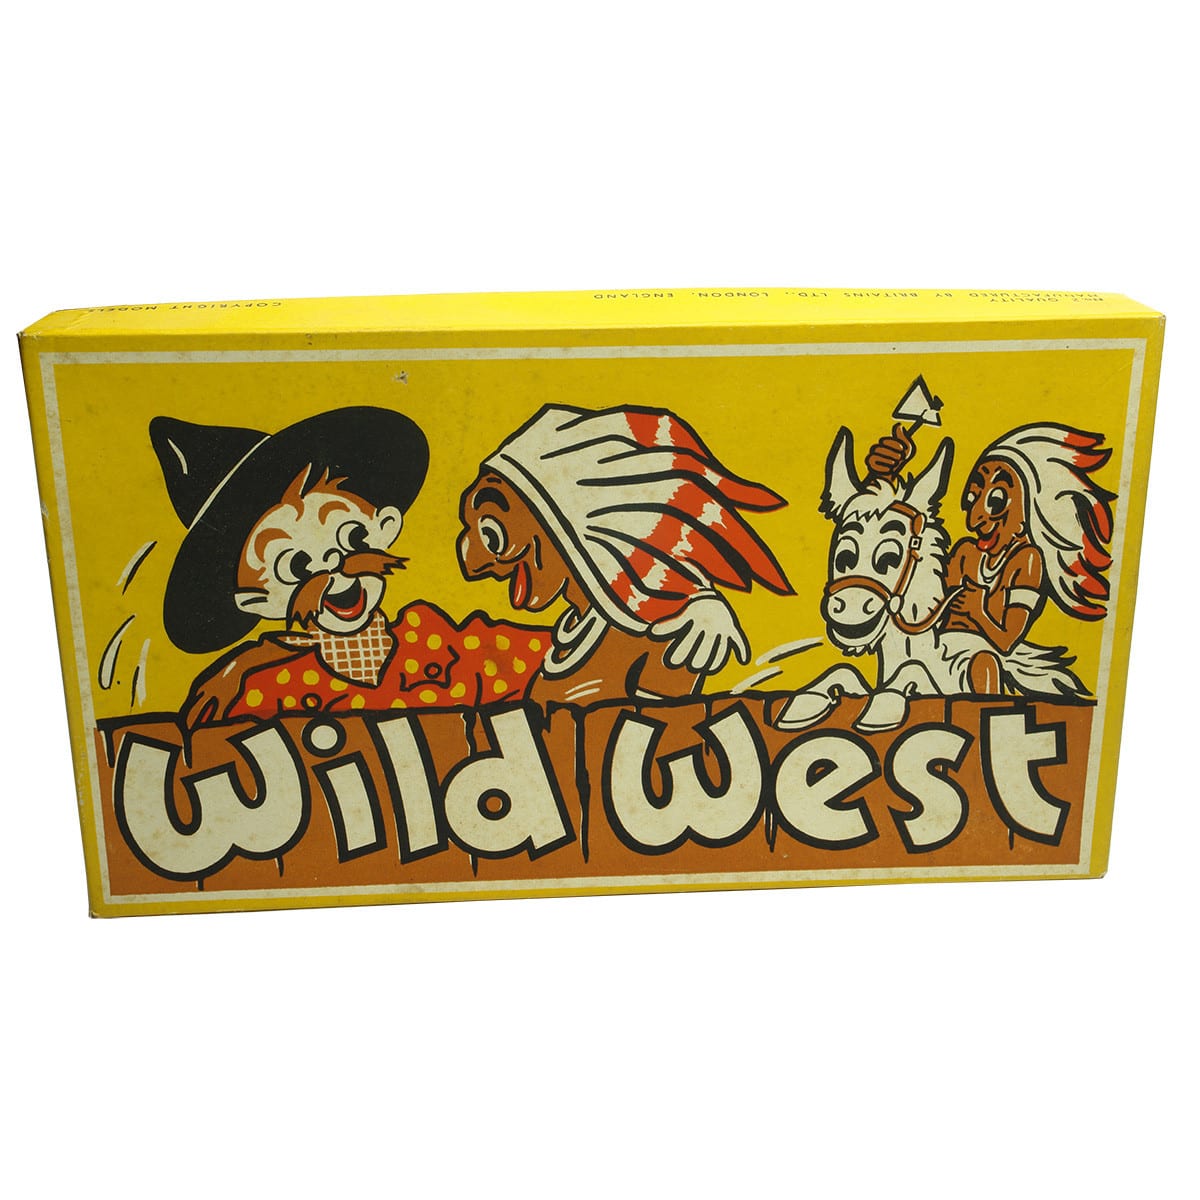 Toys. Wild West. 8 Cowboys & Indians metal models. Britains Limited. Original Box.